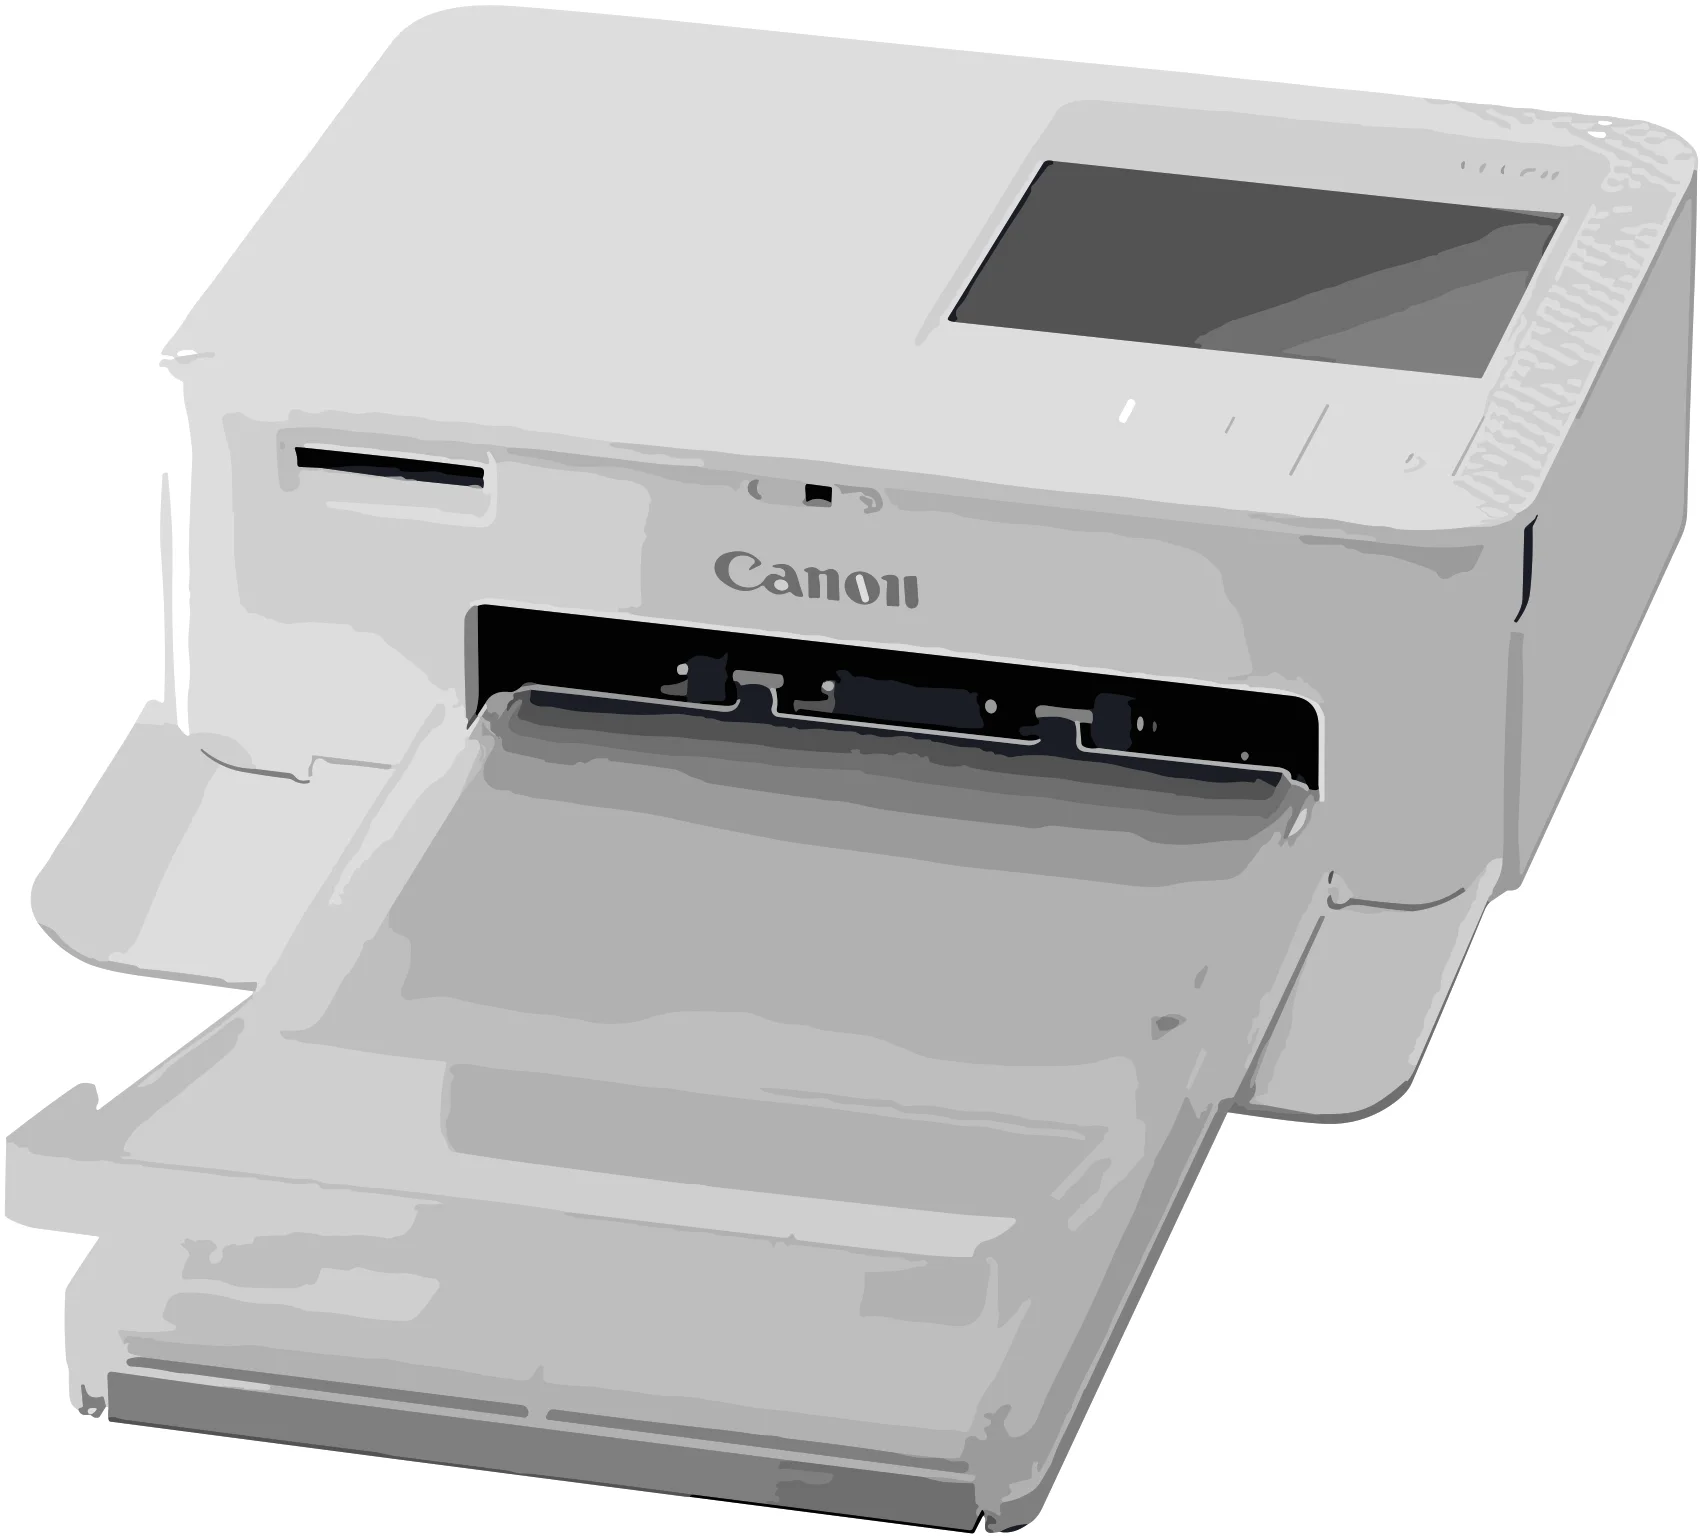 Canon Zoemini Printer 2 Impresora Fotográfica Portátil Blanca